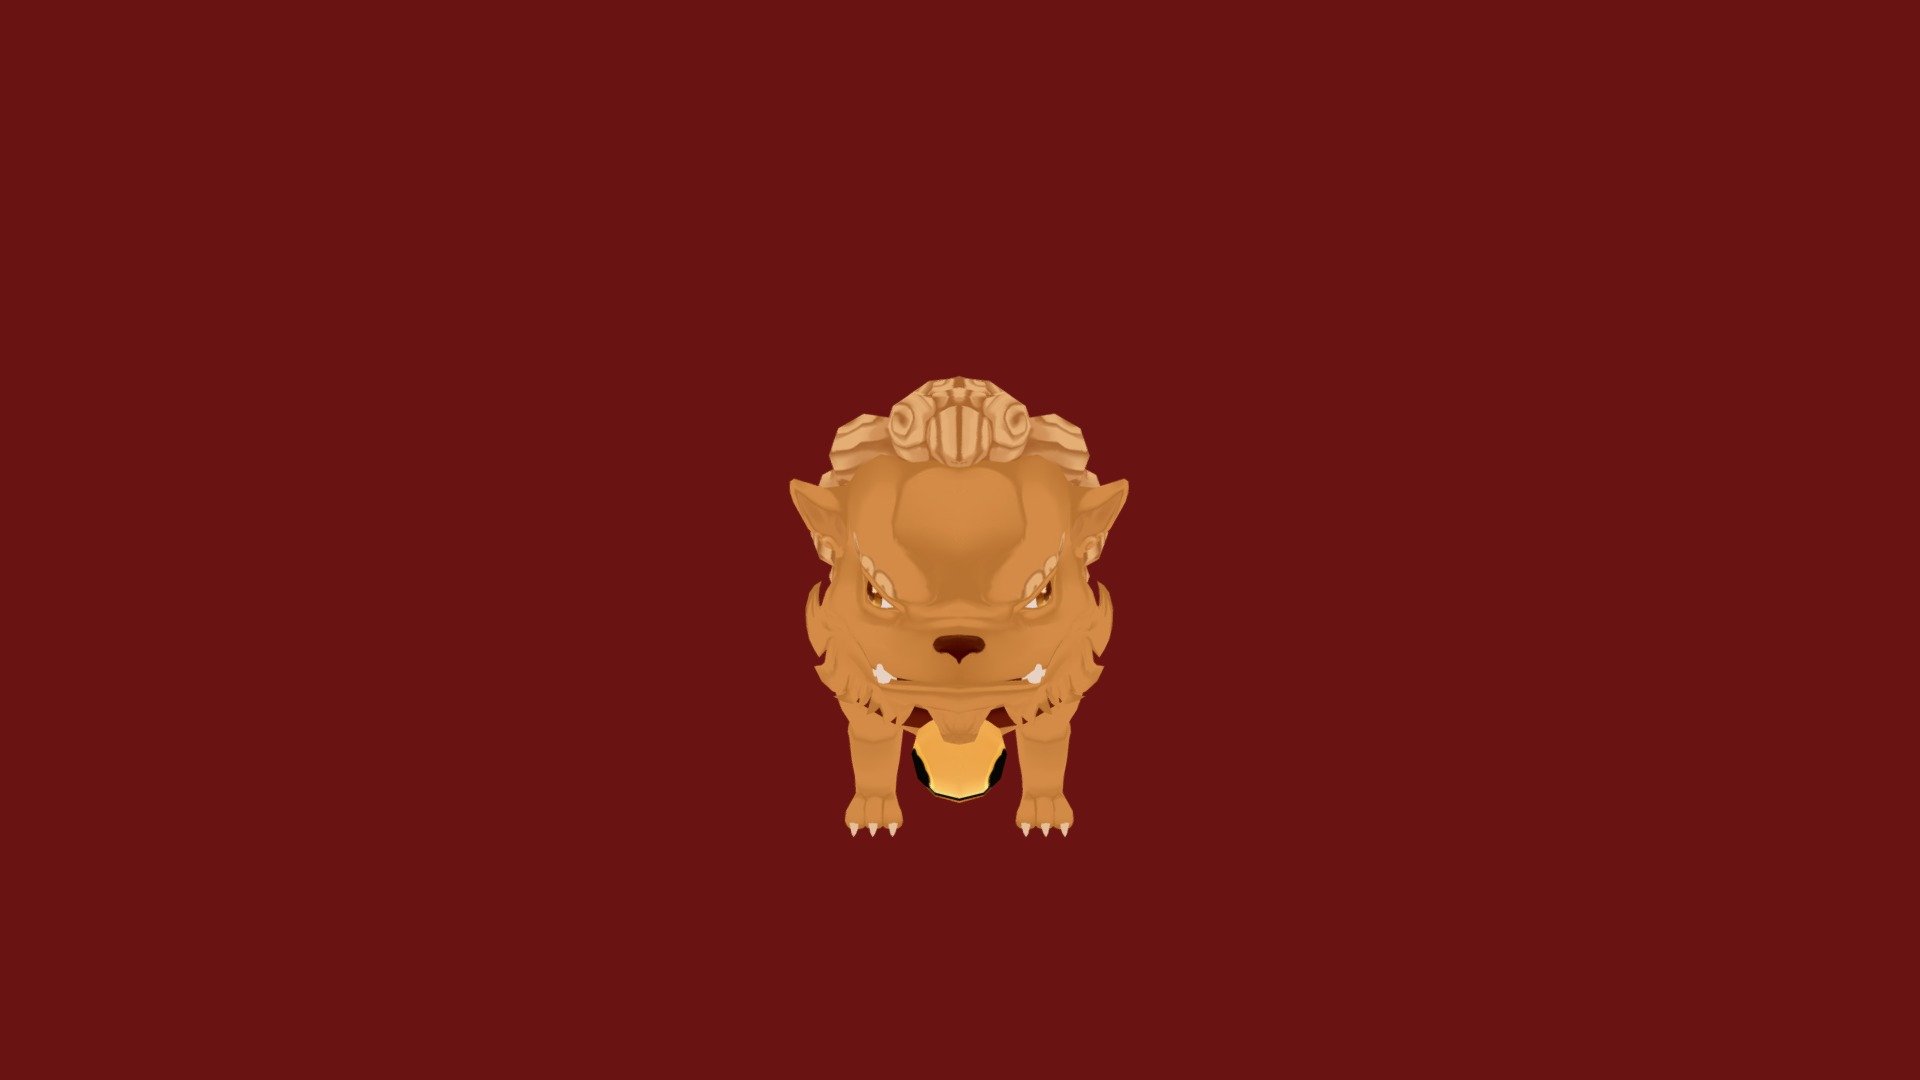 Foo Lion